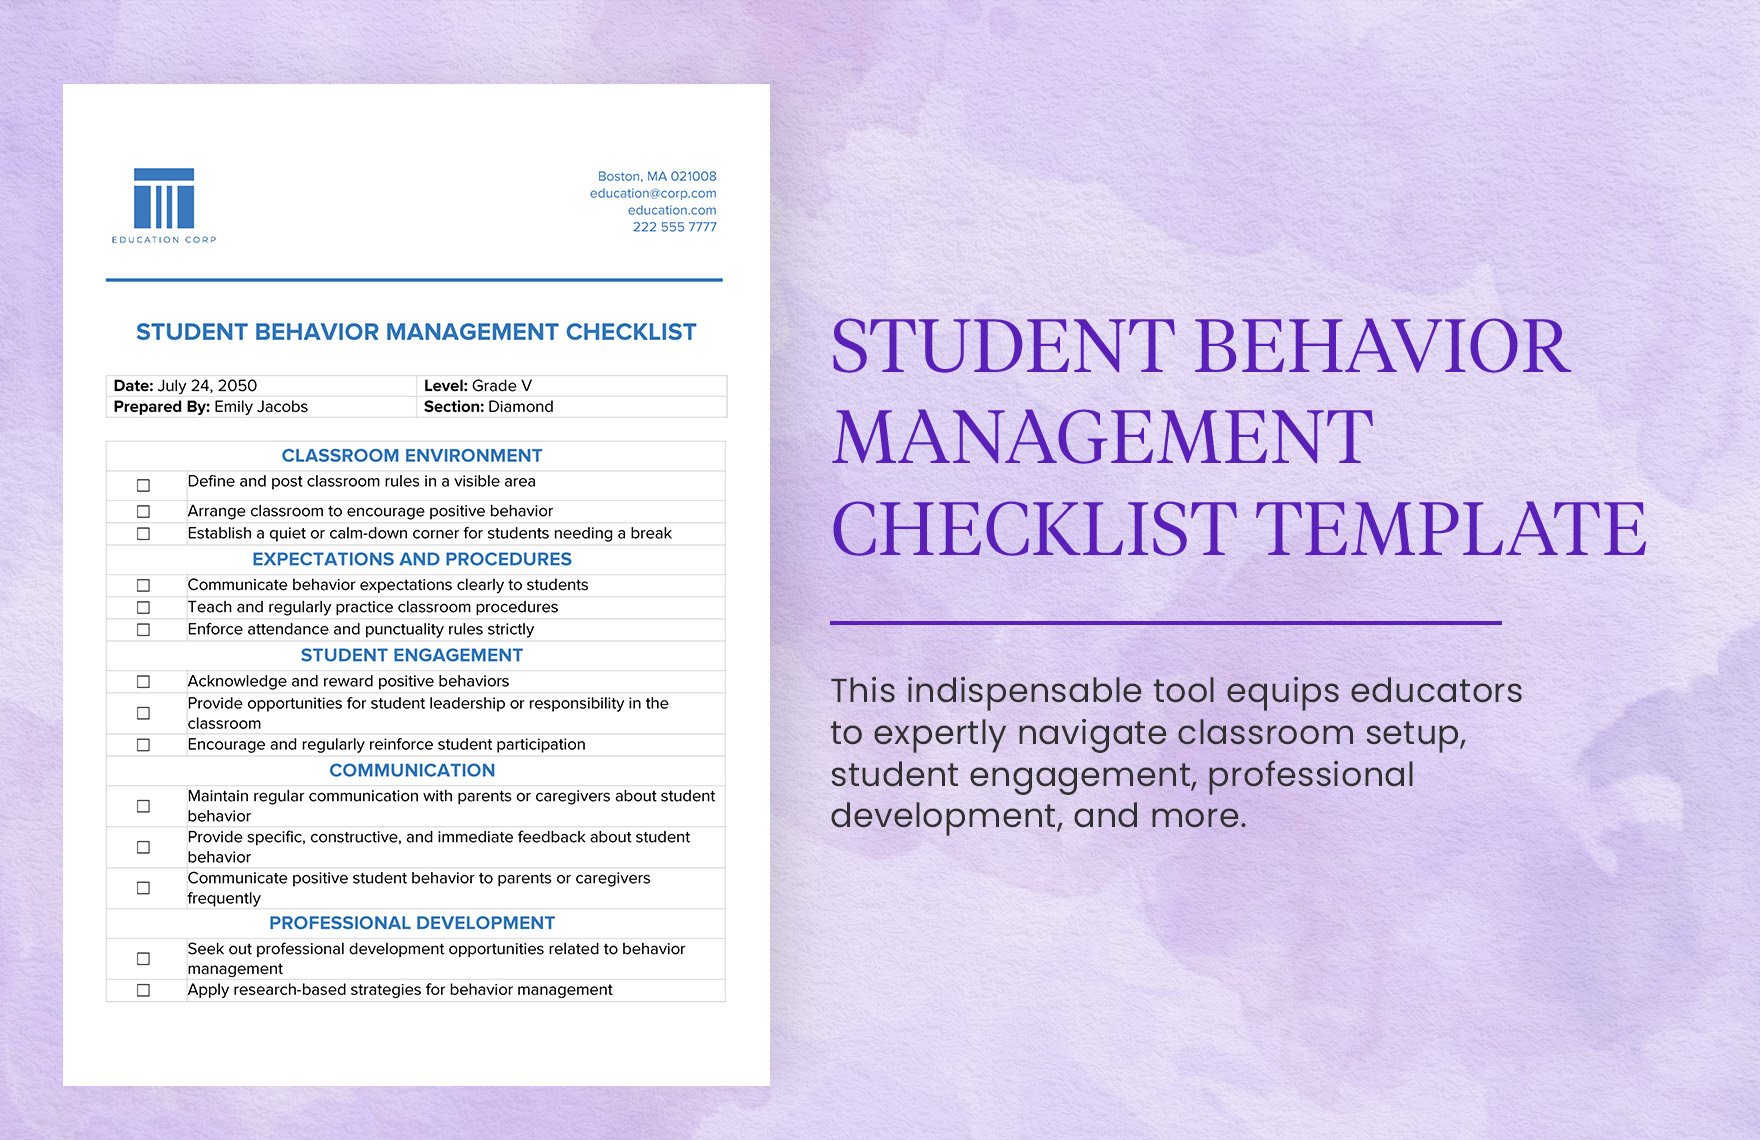 Student Behavior Management Checklist Template in Word, Google Docs, PDF